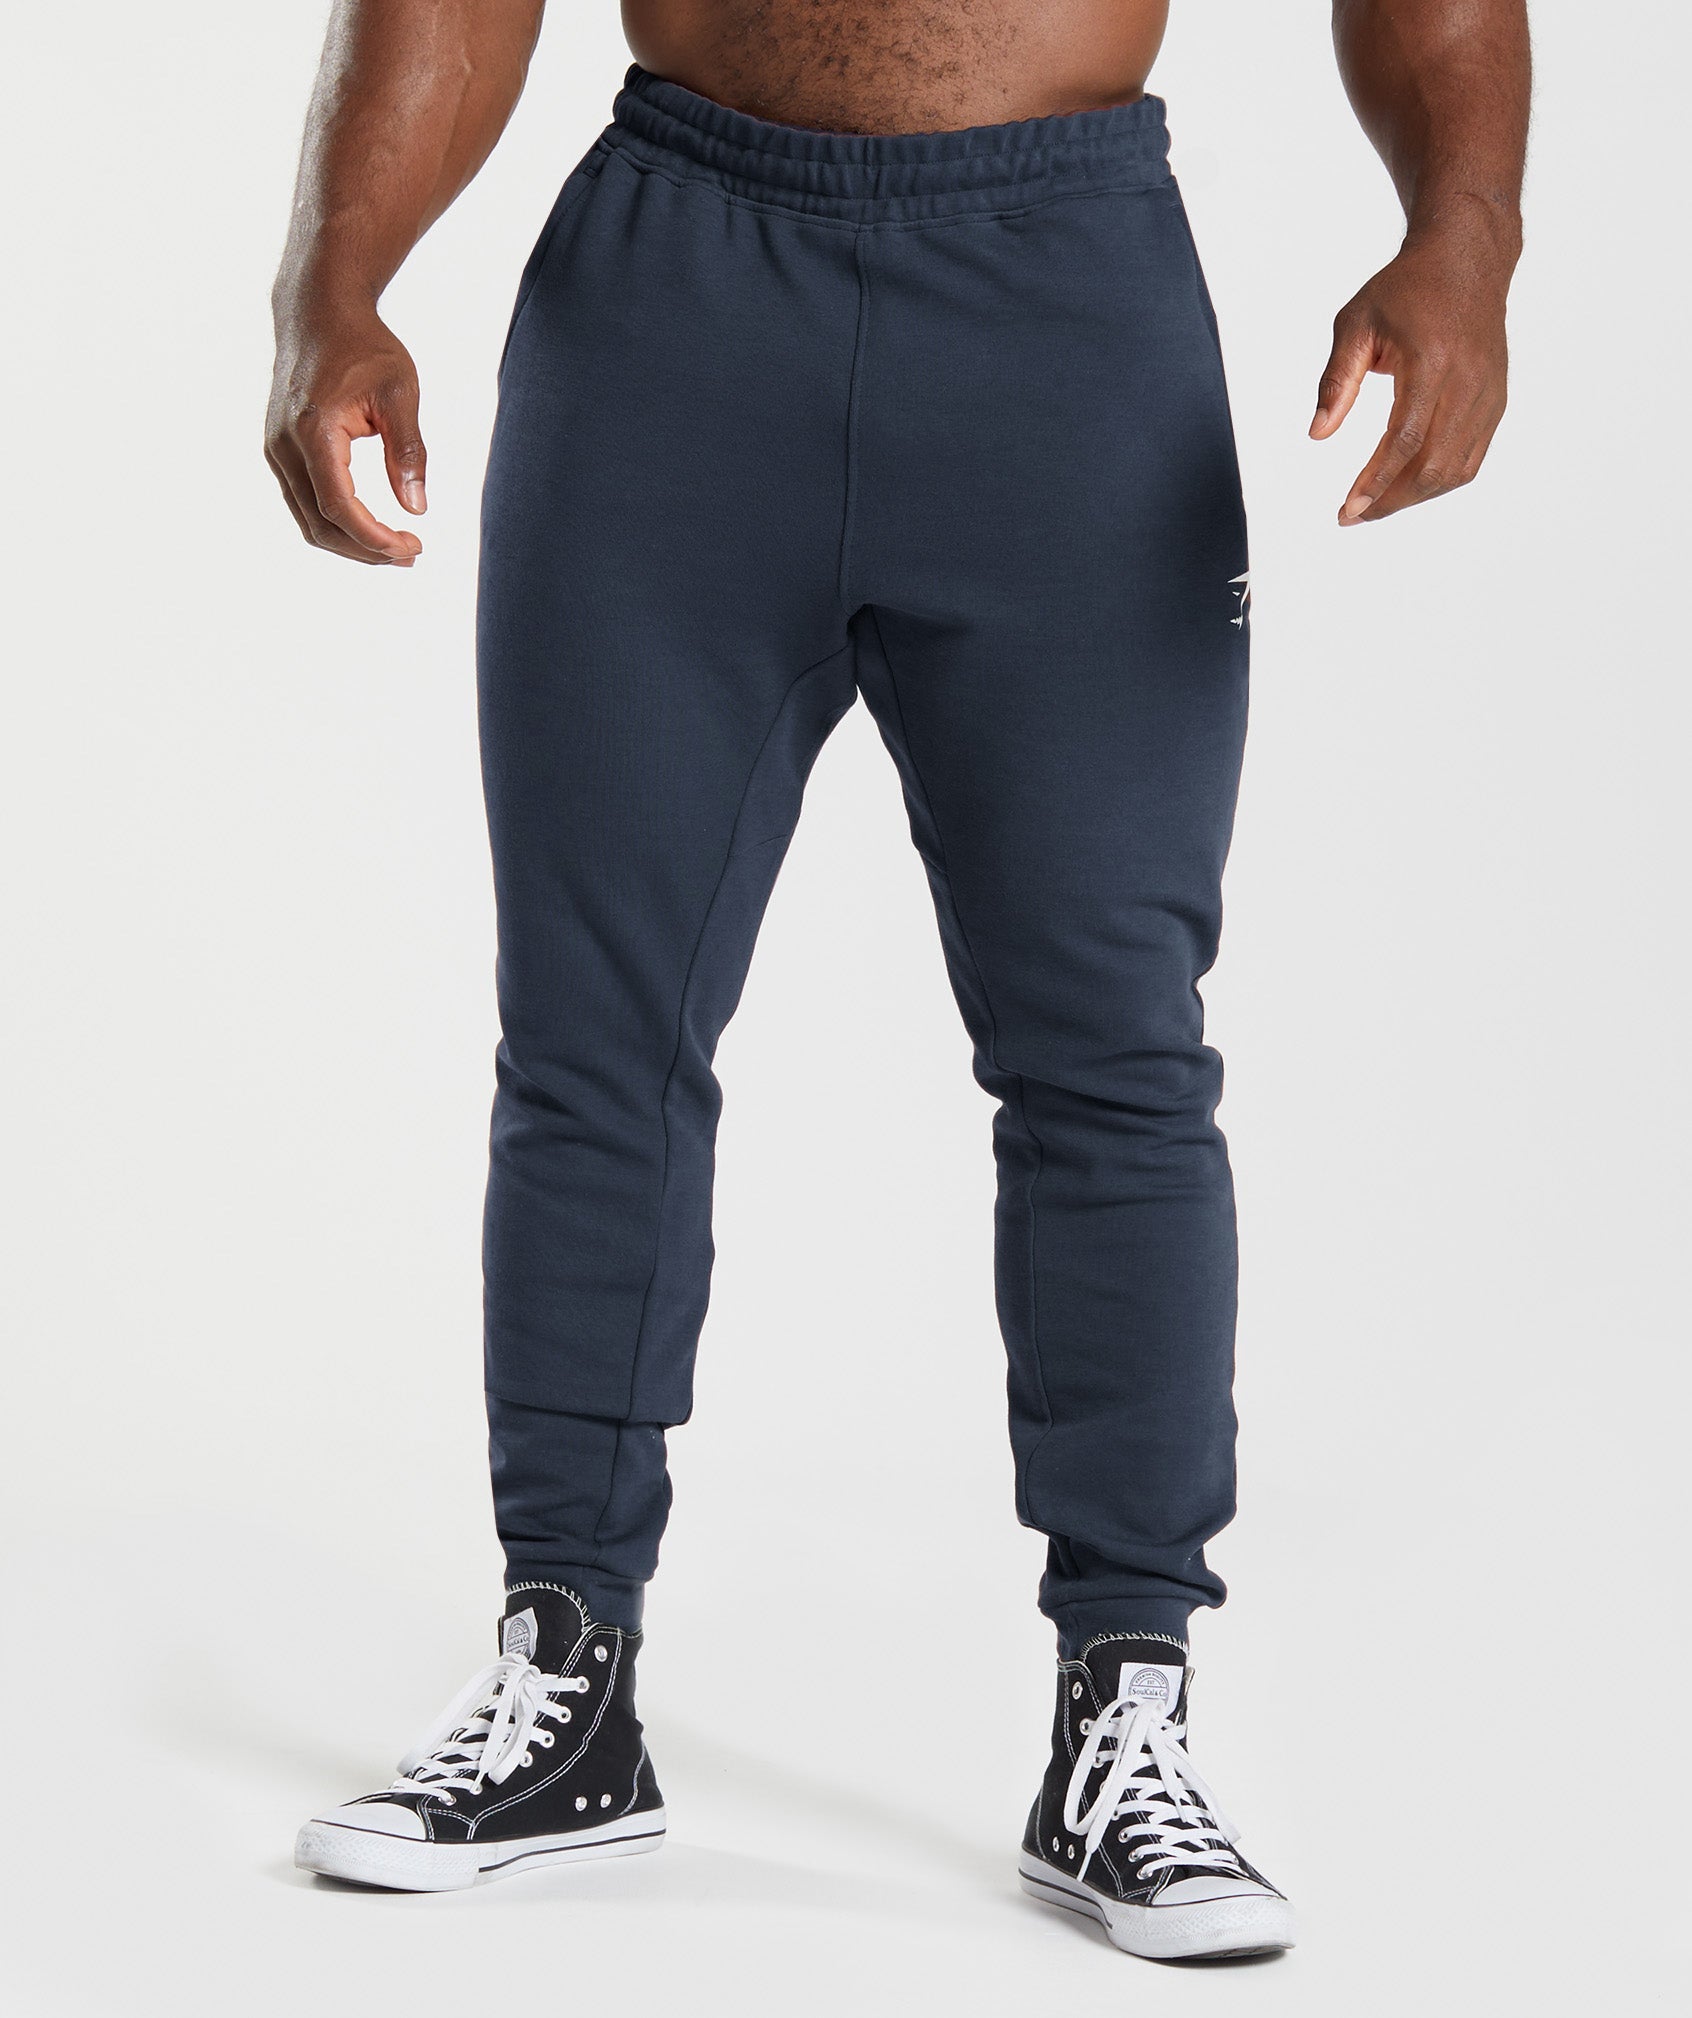 Gymshark Ultra Joggers - Light Grey Marl 1 | Mens workout clothes, Track  pants mens, Pants outfit men